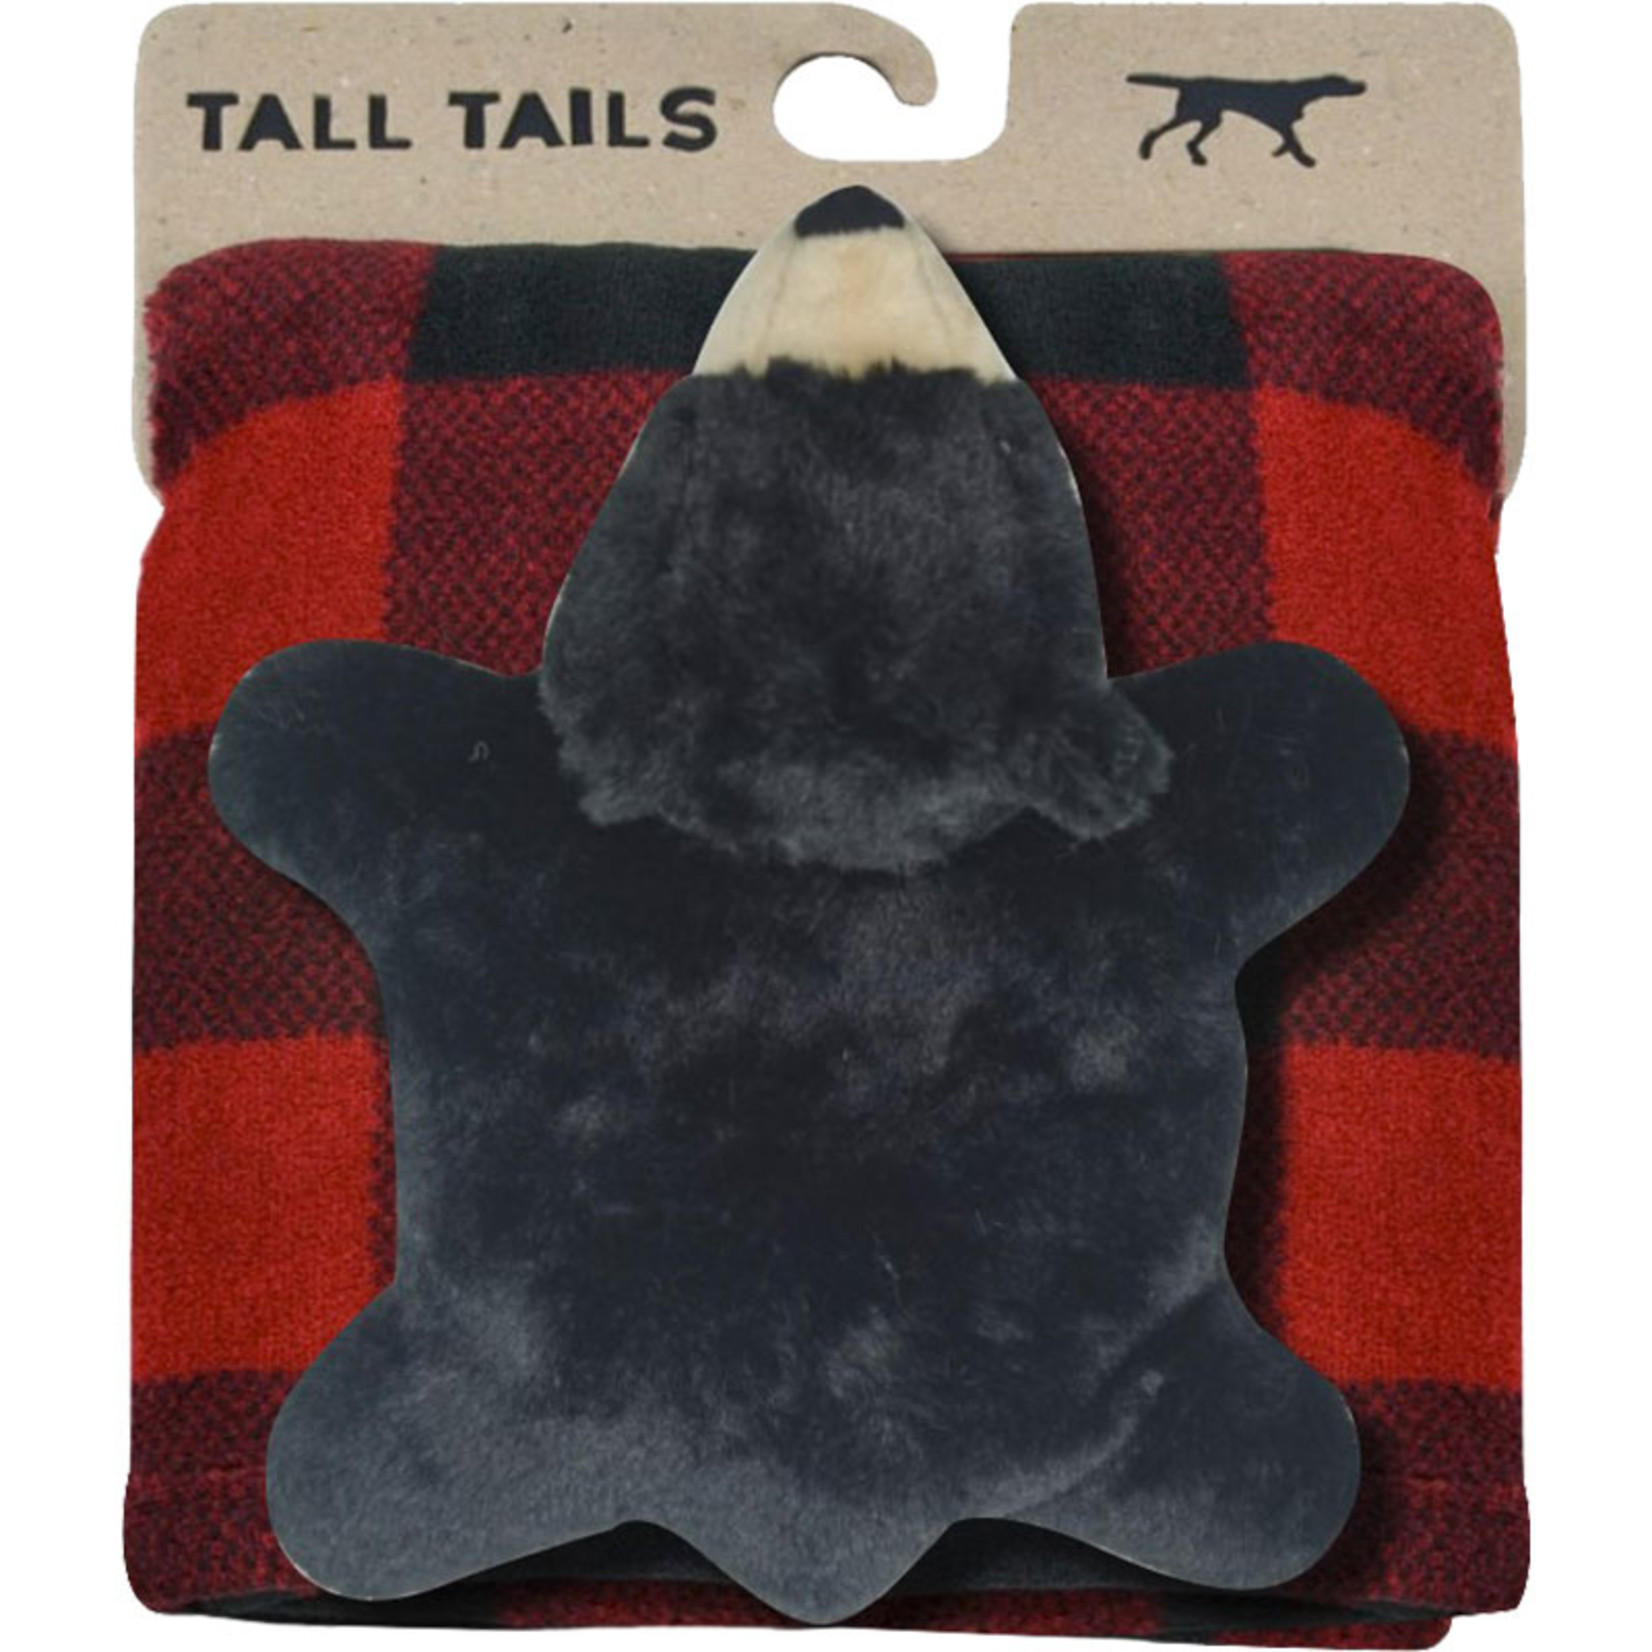 TALL TAILS Tall Tails Blanket & Bear